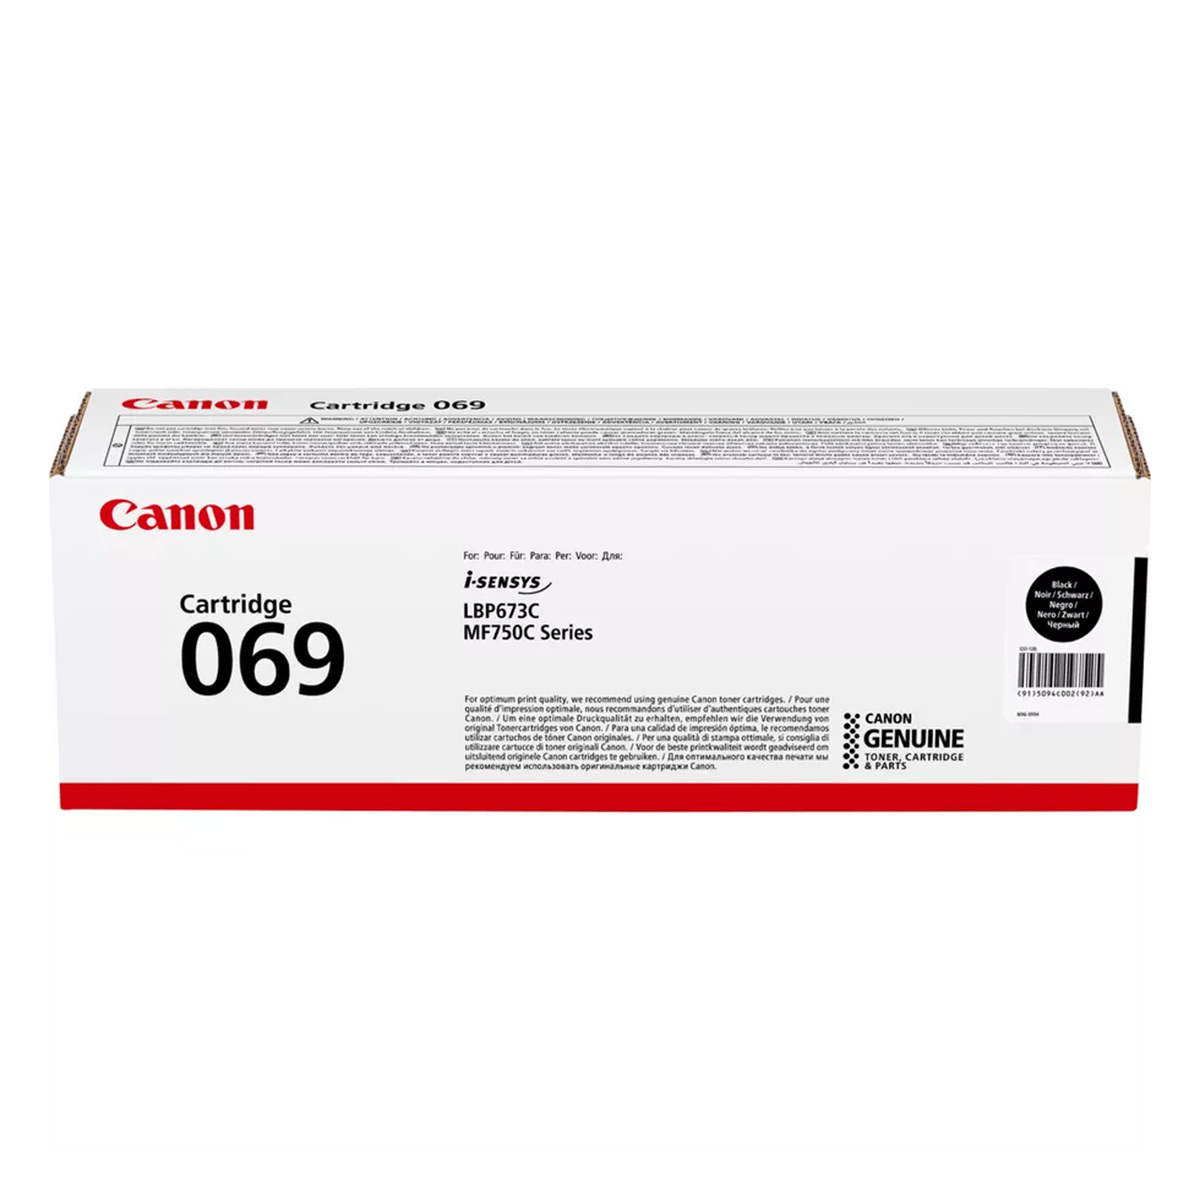 Canon Toner Cartridge, Black, 069